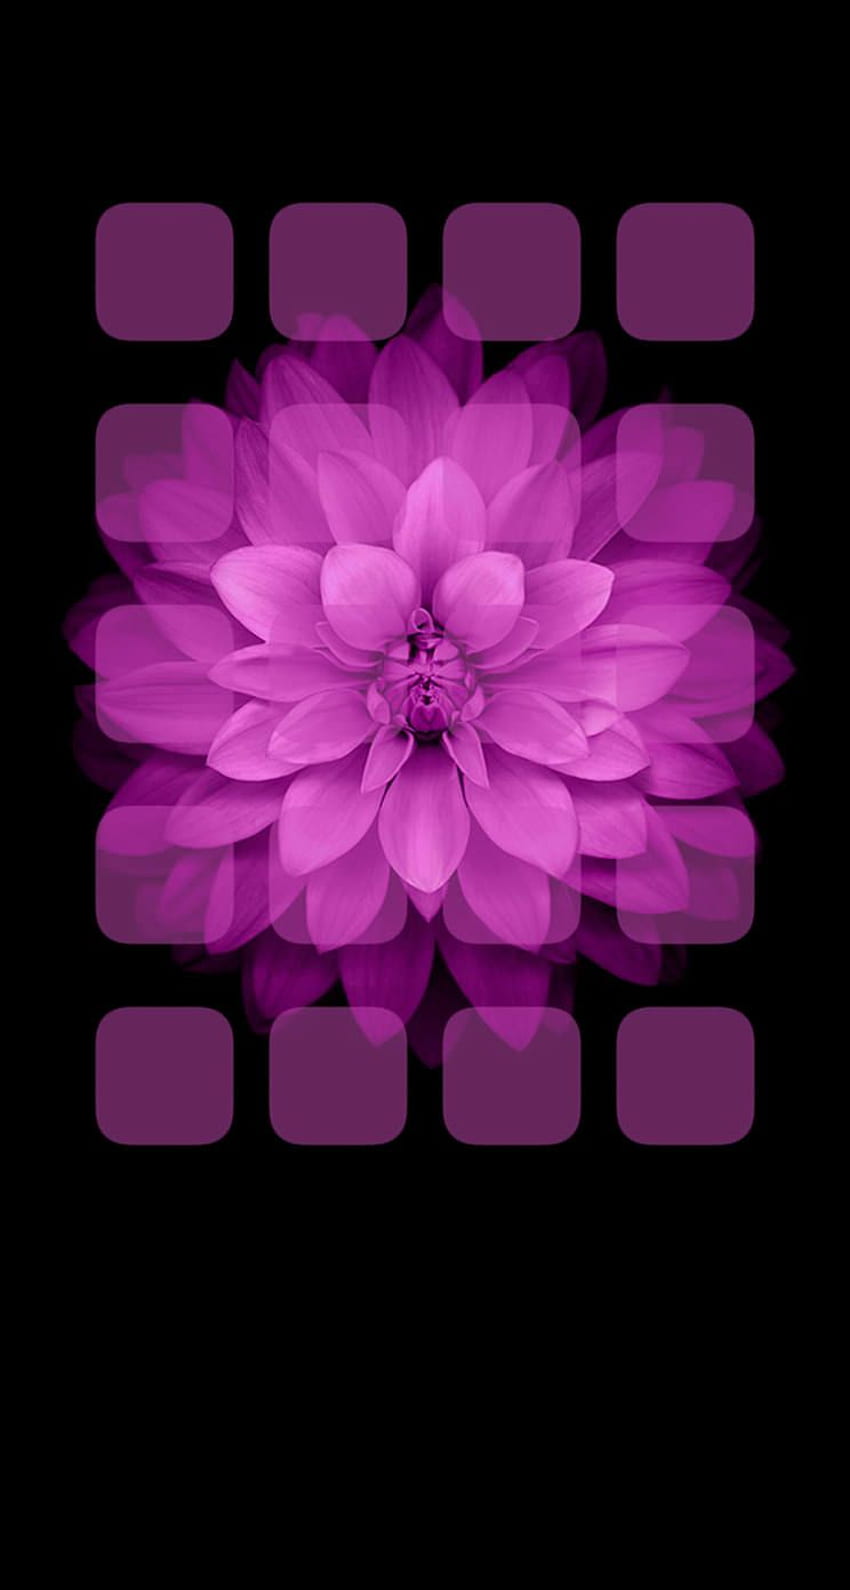 Shelf purple black flowers. .sc iPhone5s, SE HD phone wallpaper